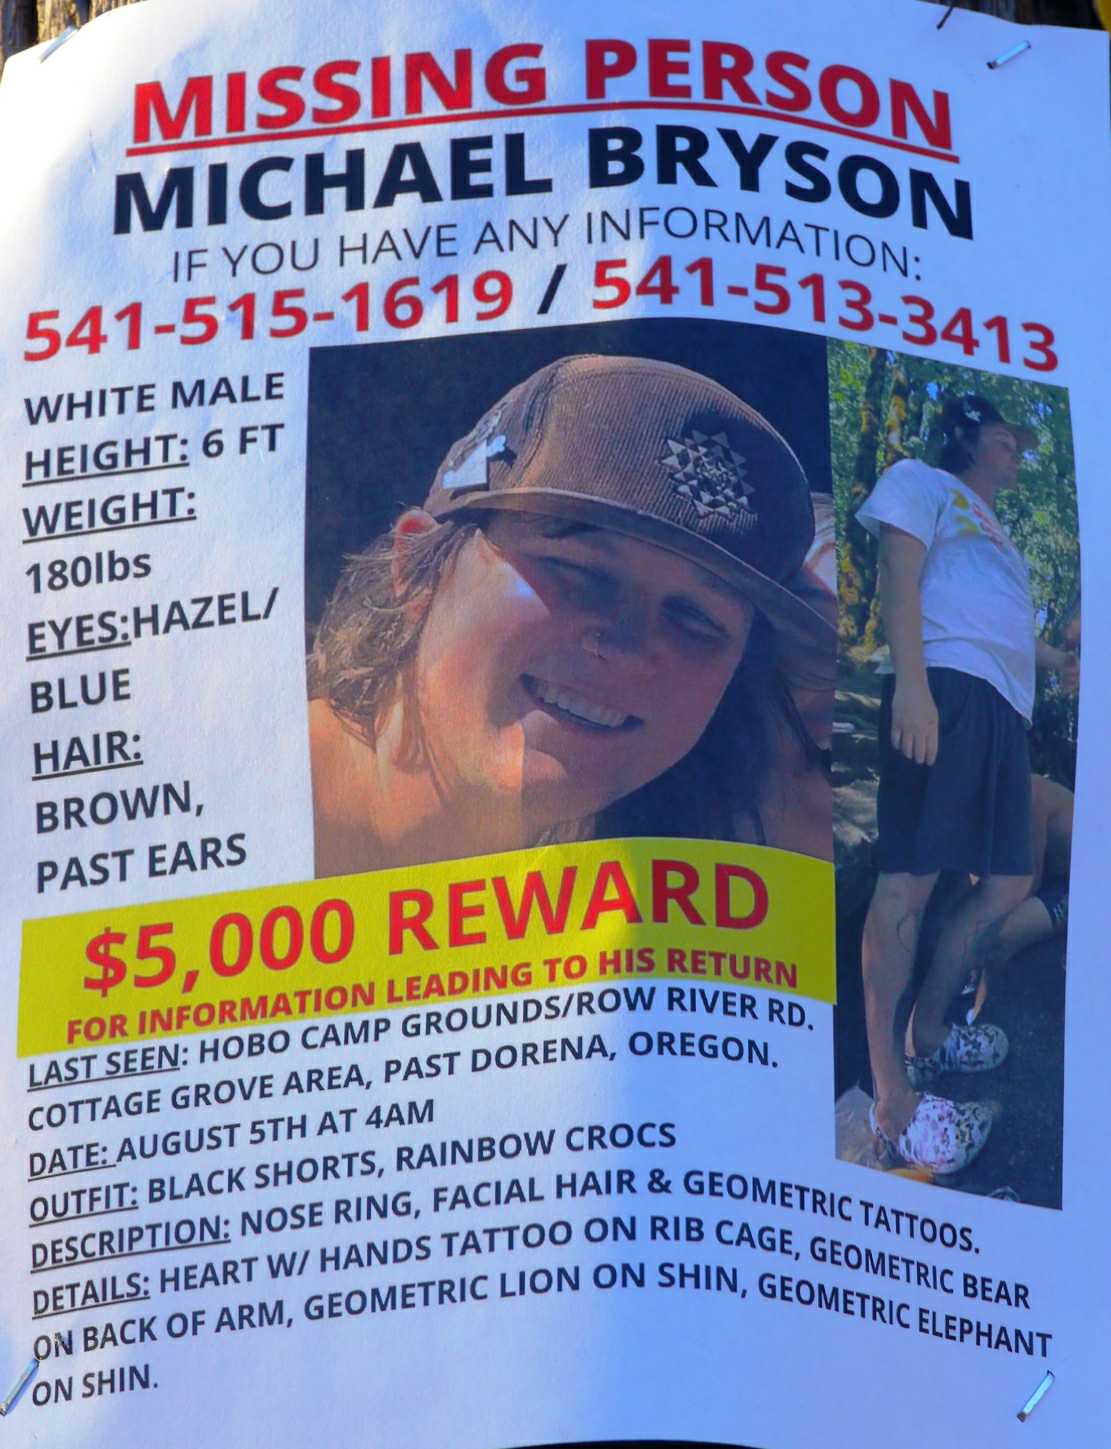 Michael Bryson, Michael Bryson missing